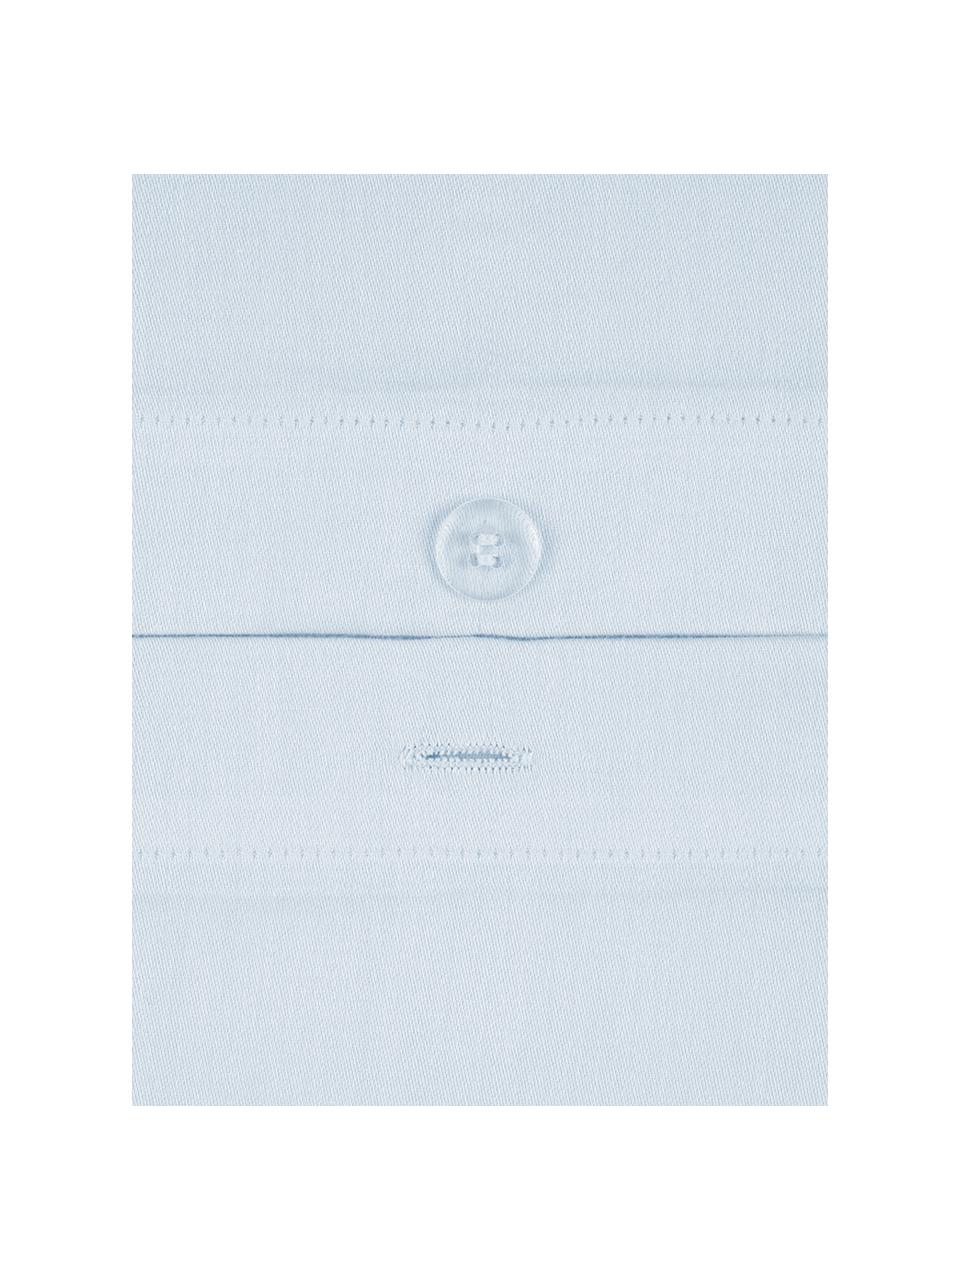 Baumwollsatin-Kissenbezug Comfort in Hellblau, 50 x 70 cm, Webart: Satin, leicht glänzend Fa, Hellblau, B 50 x L 70 cm